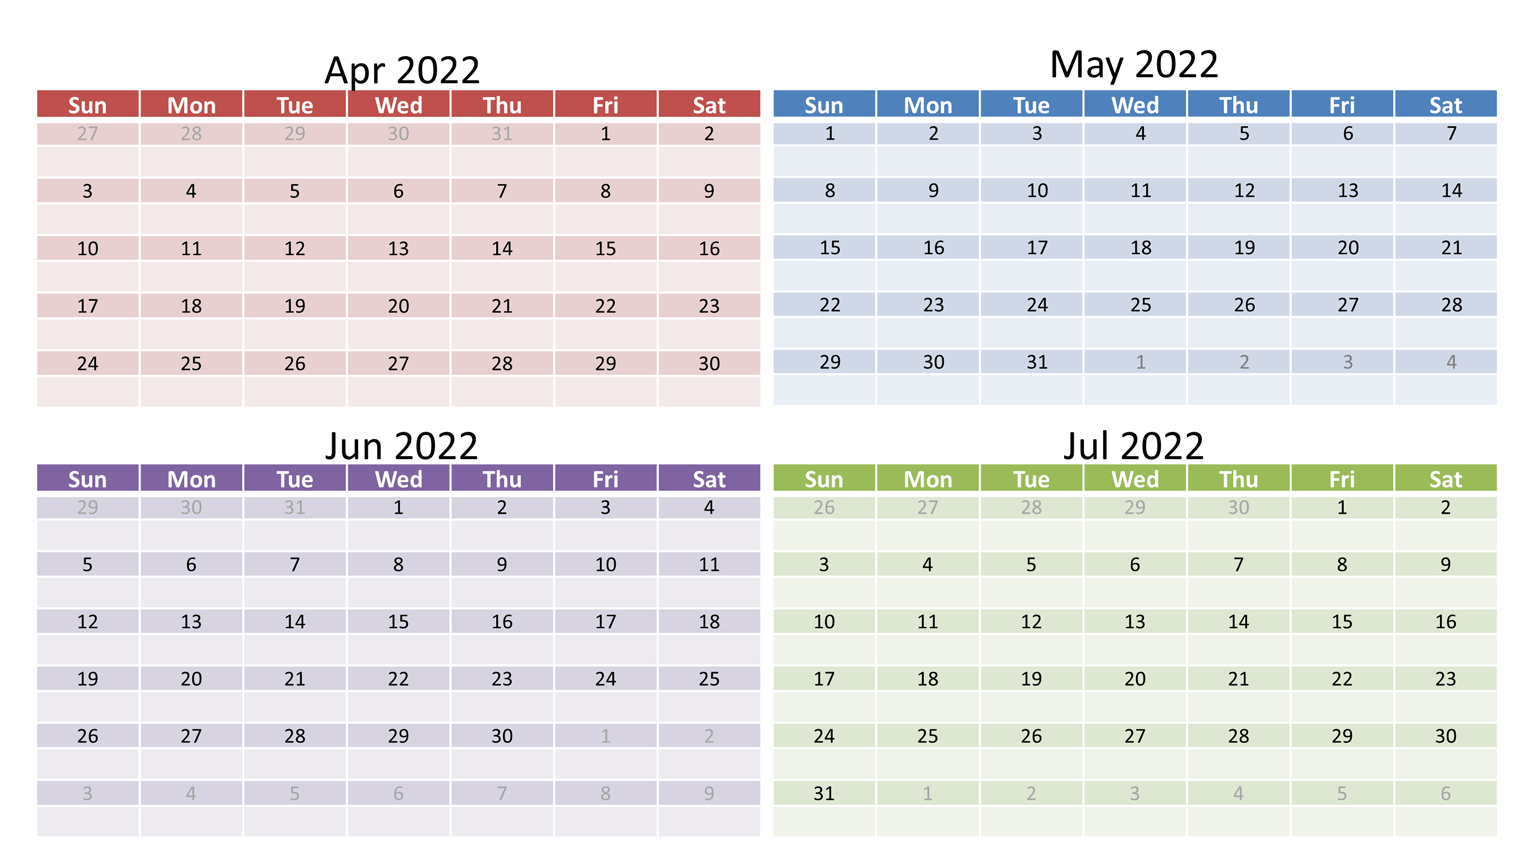 April 2022 calendar